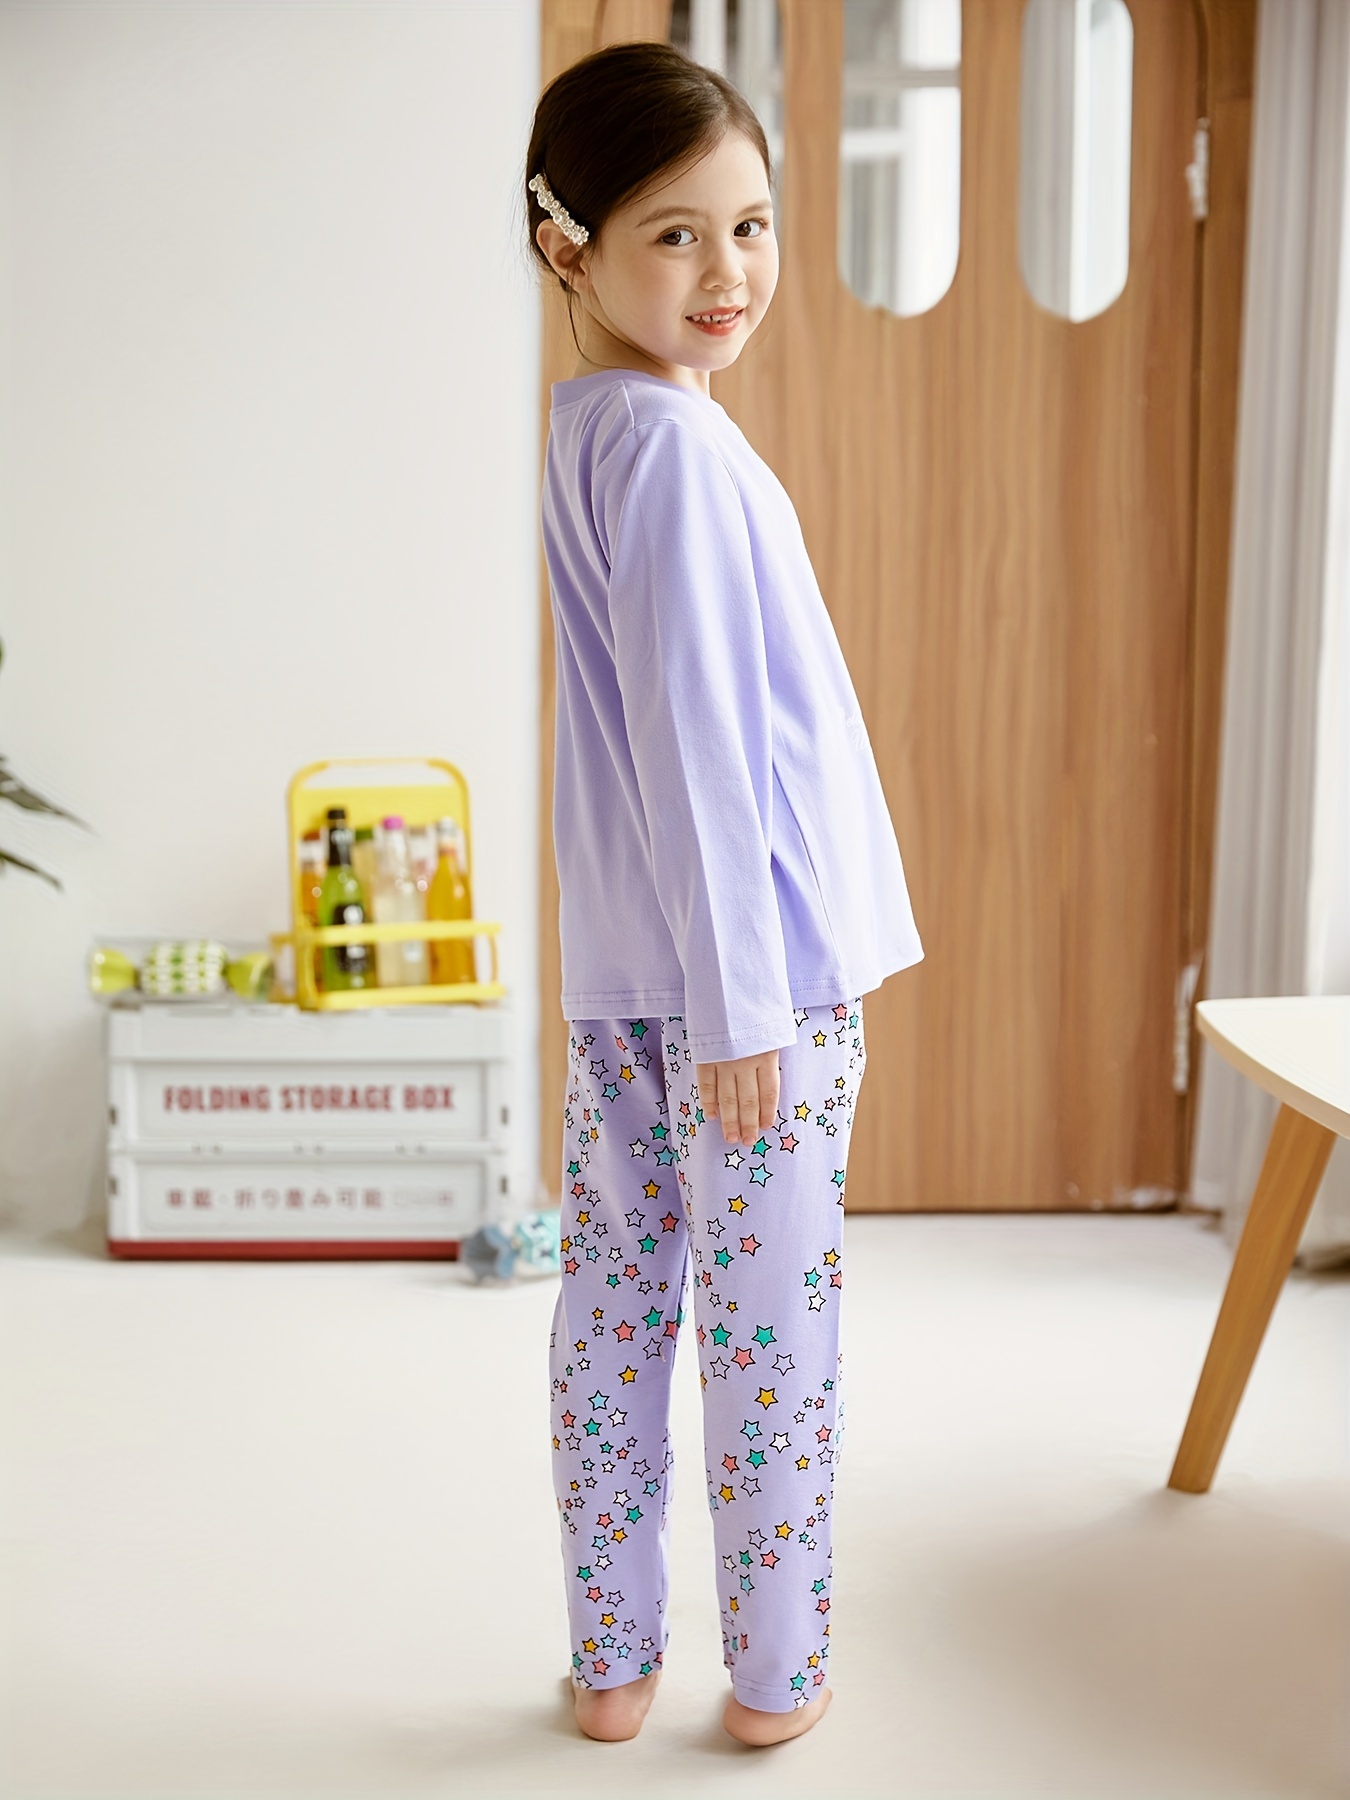 Marie Disney Aristocats Pyjama Set Kids Girls 2 3 4 5 6 7 8 9 10 Years  Nightwear